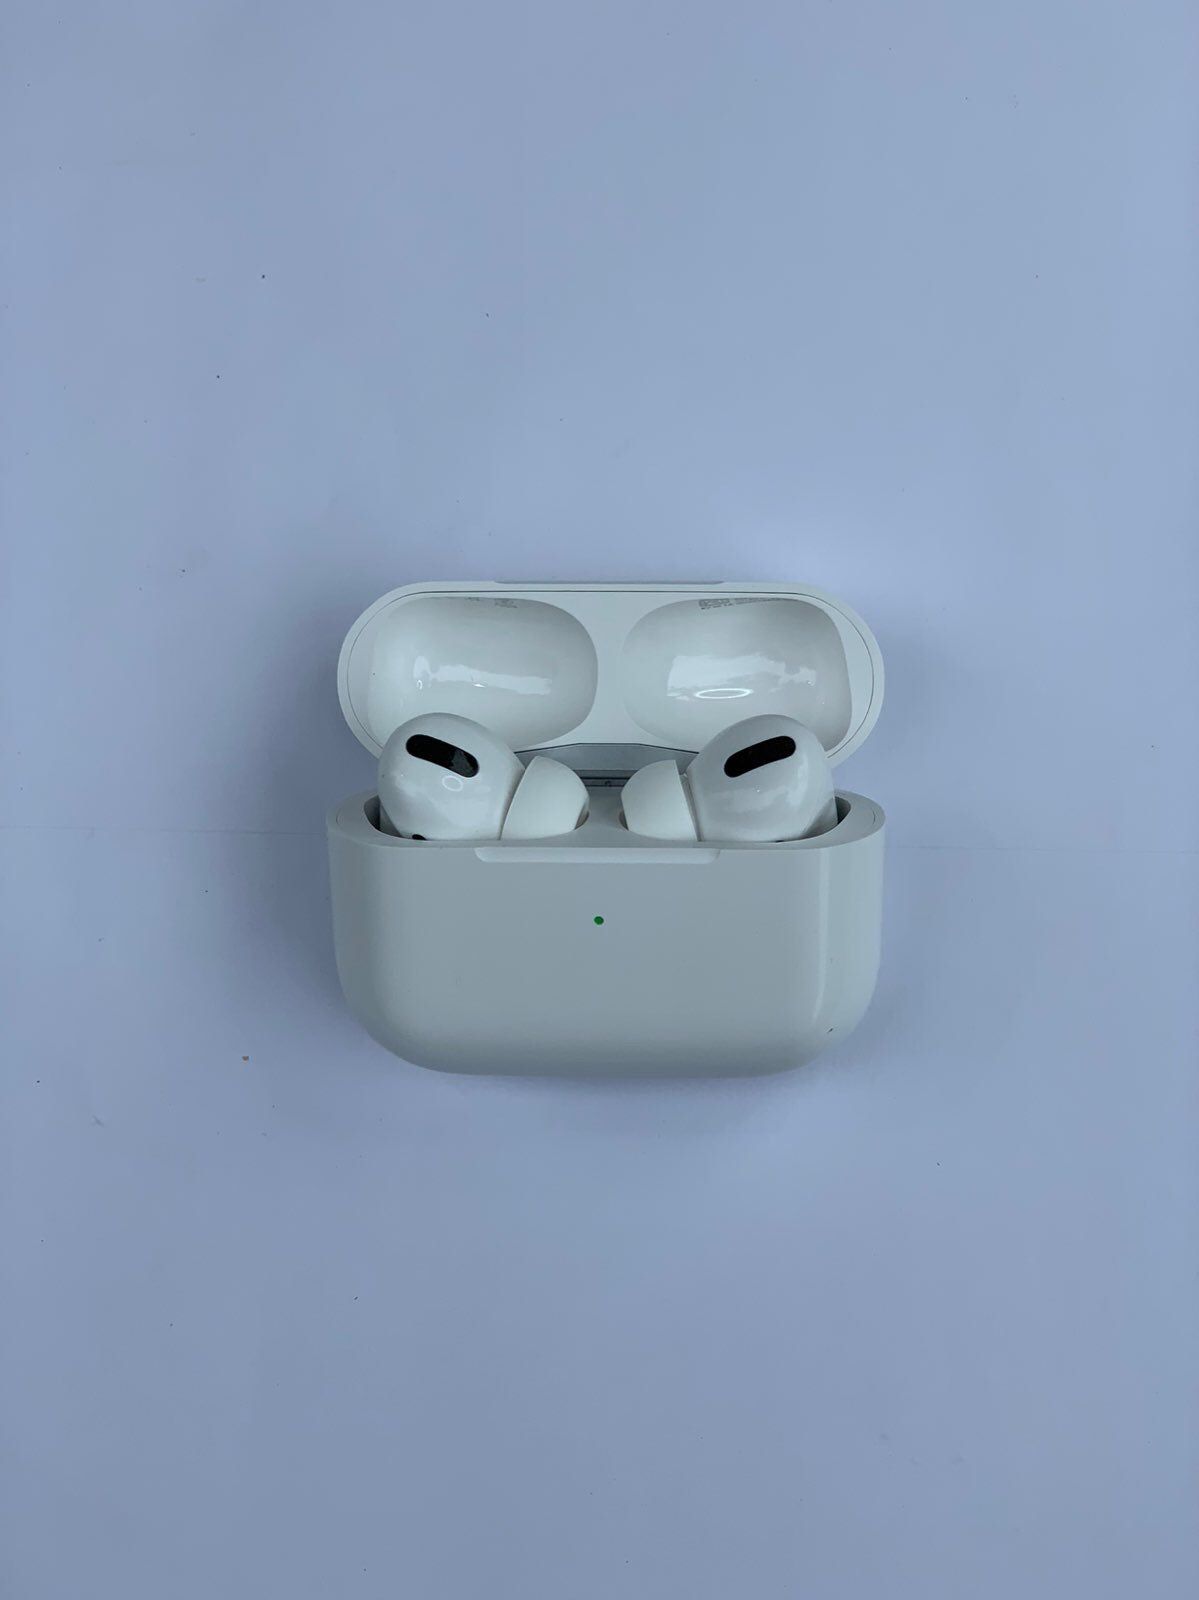 Apple AirPods Pro (original Apple brand)